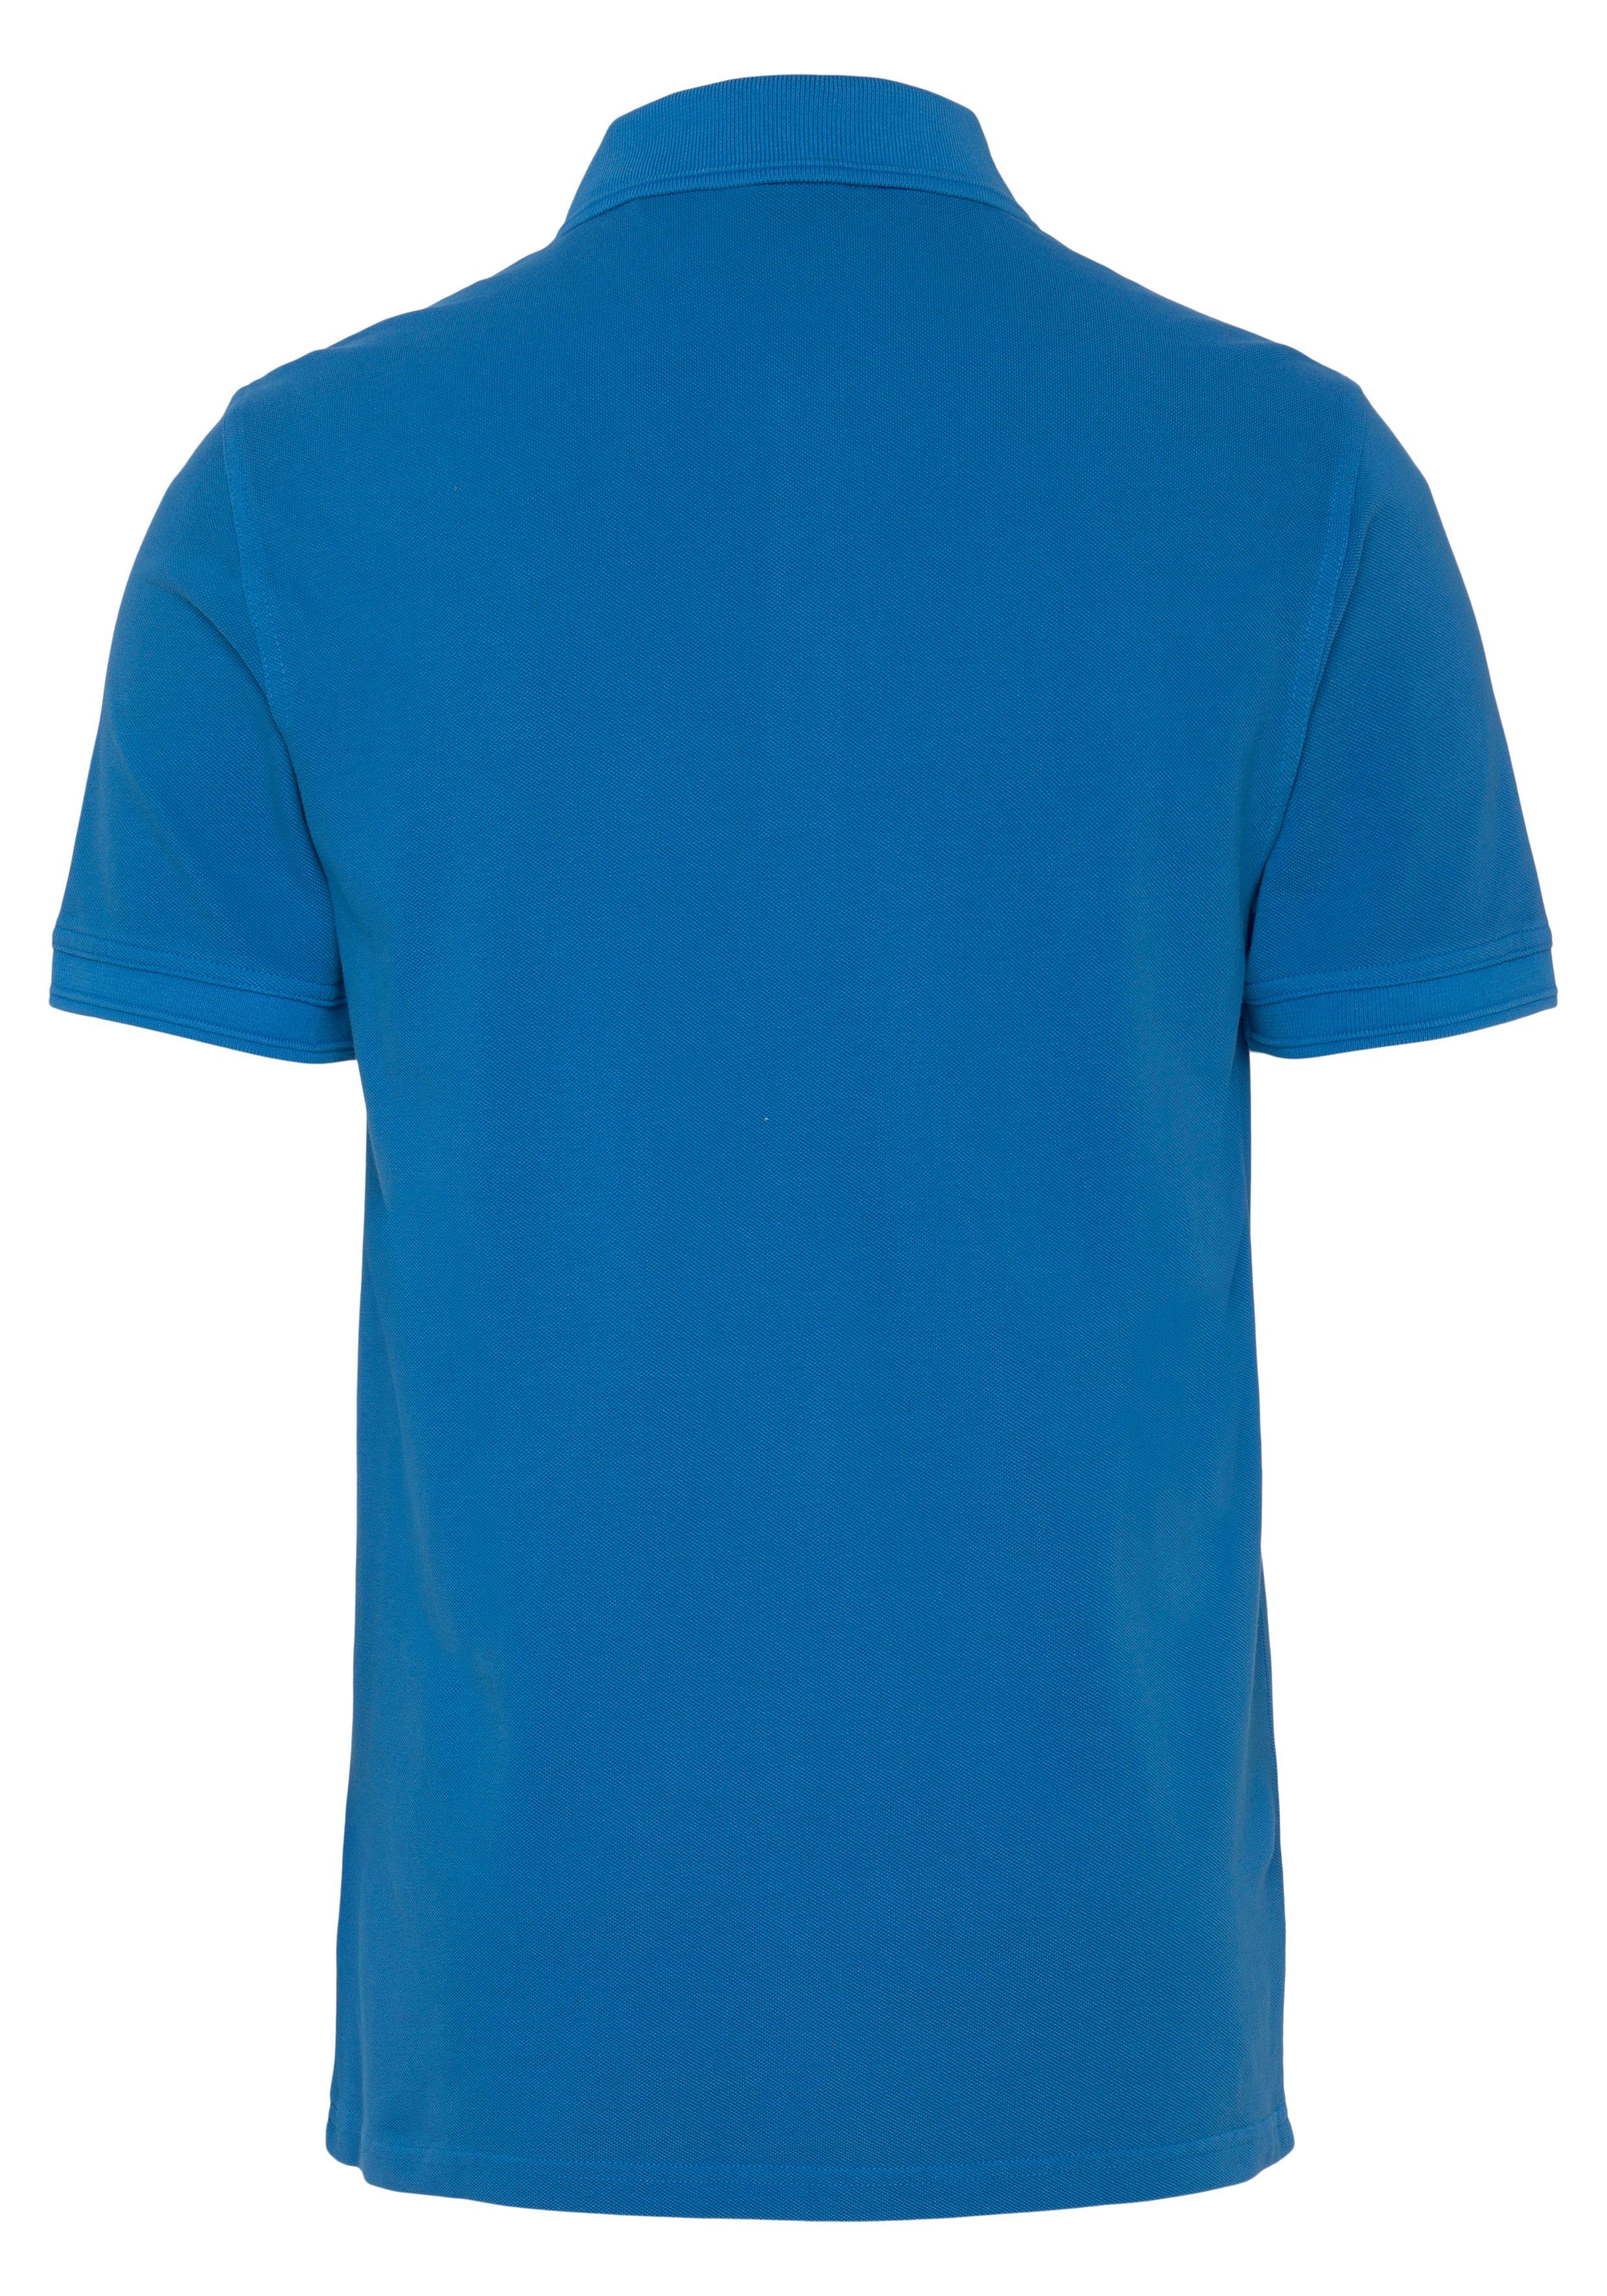 auf dezentem BOSS Prime der Poloshirt Logoschriftzug 10203439 Open_Blue1 01 ORANGE mit Brust